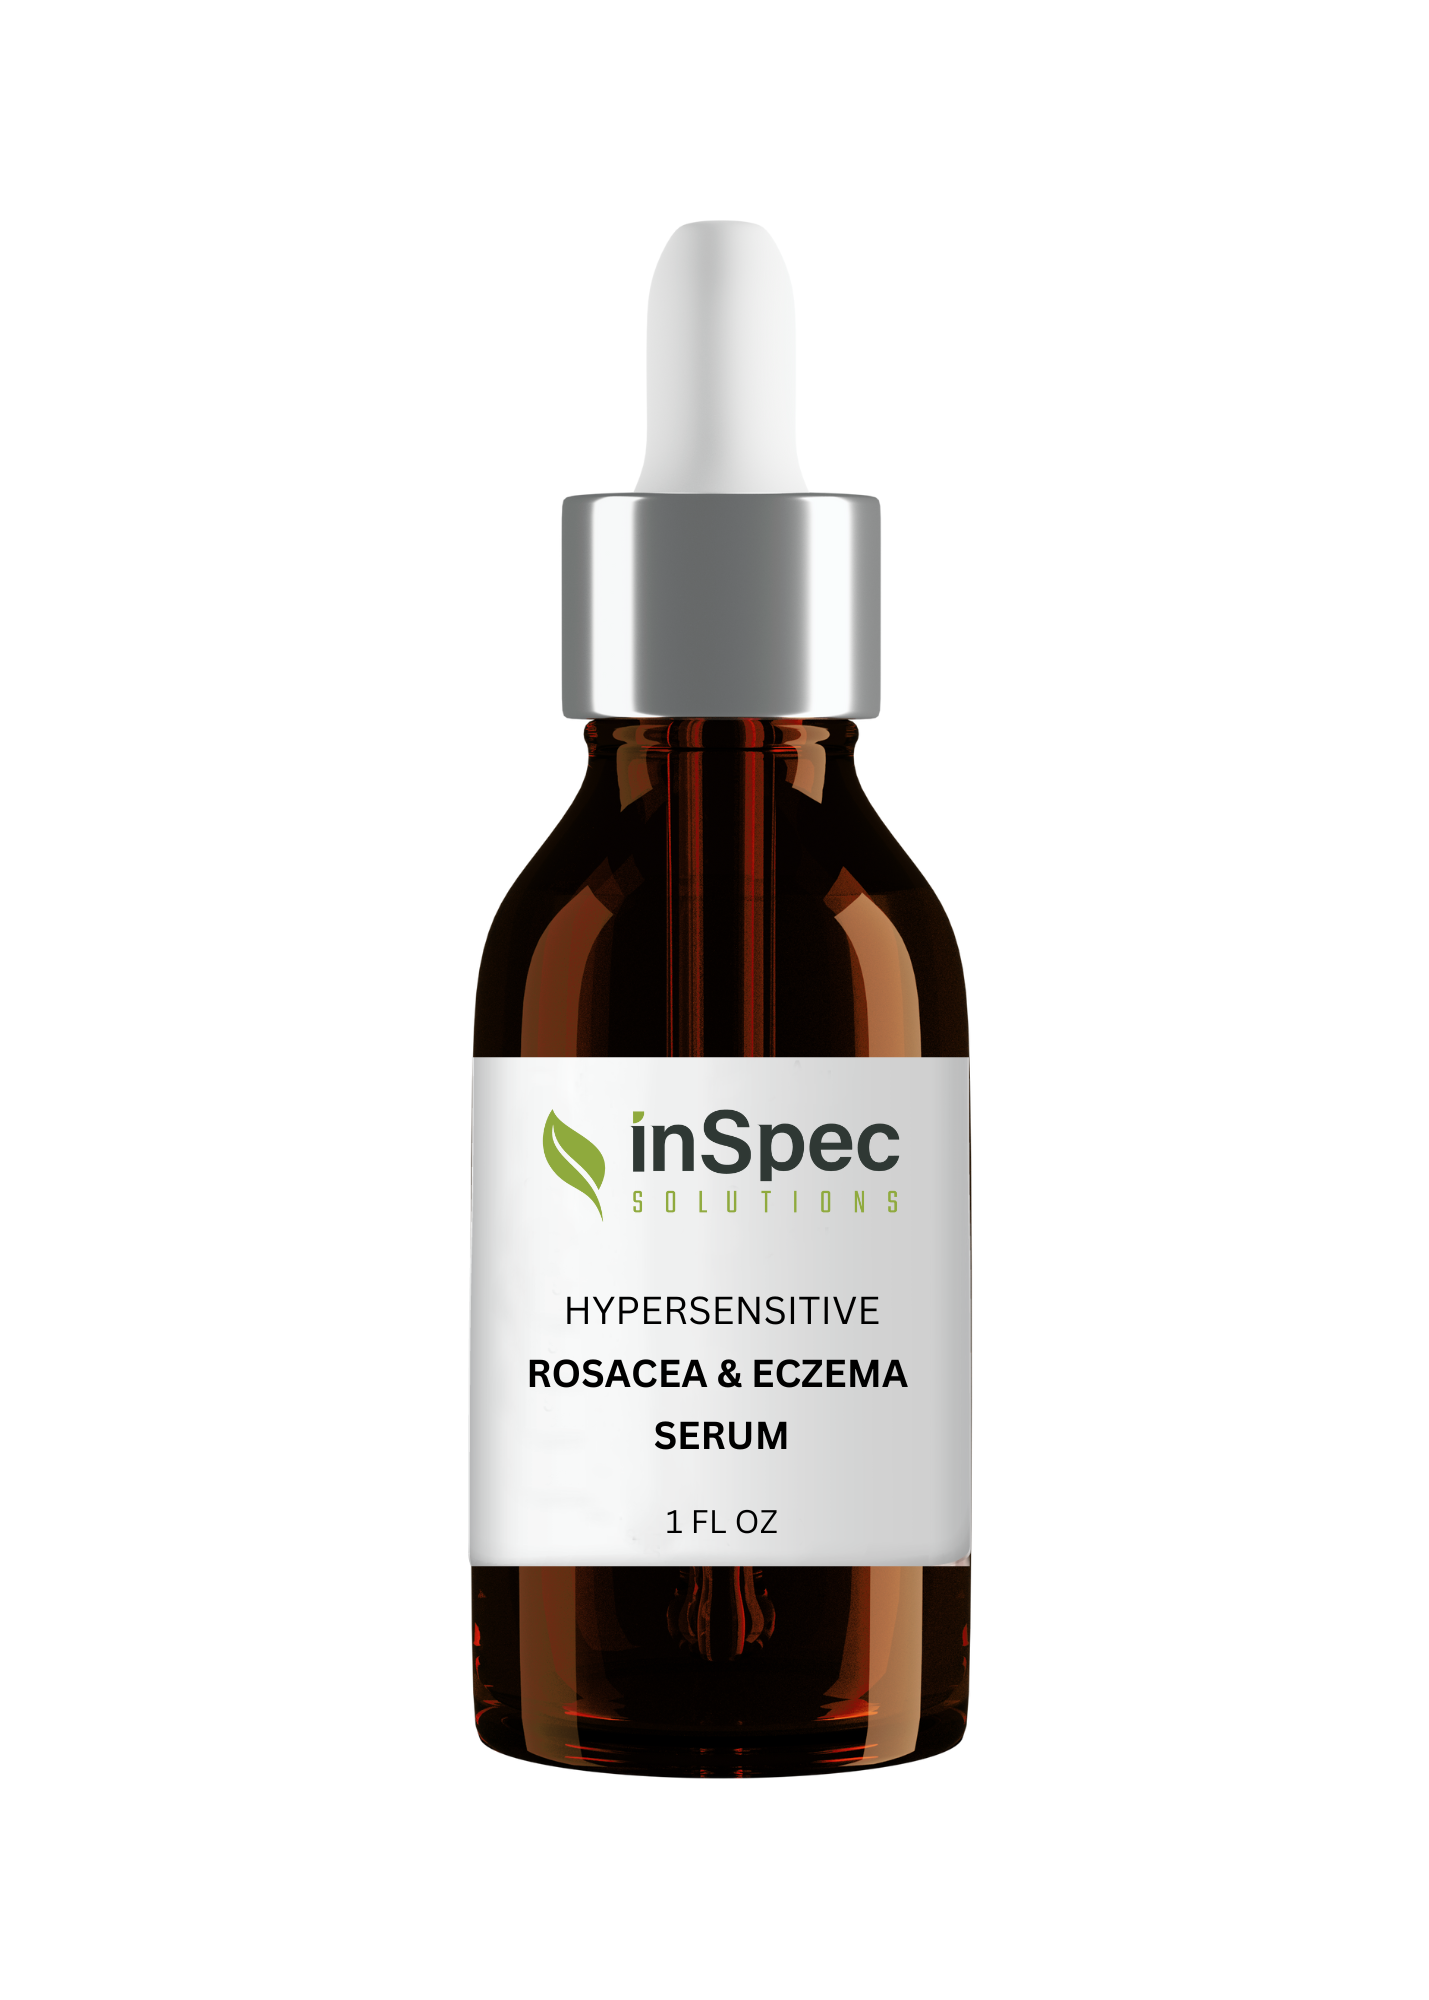 Hypersensitive Rosacea & Eczema Serum